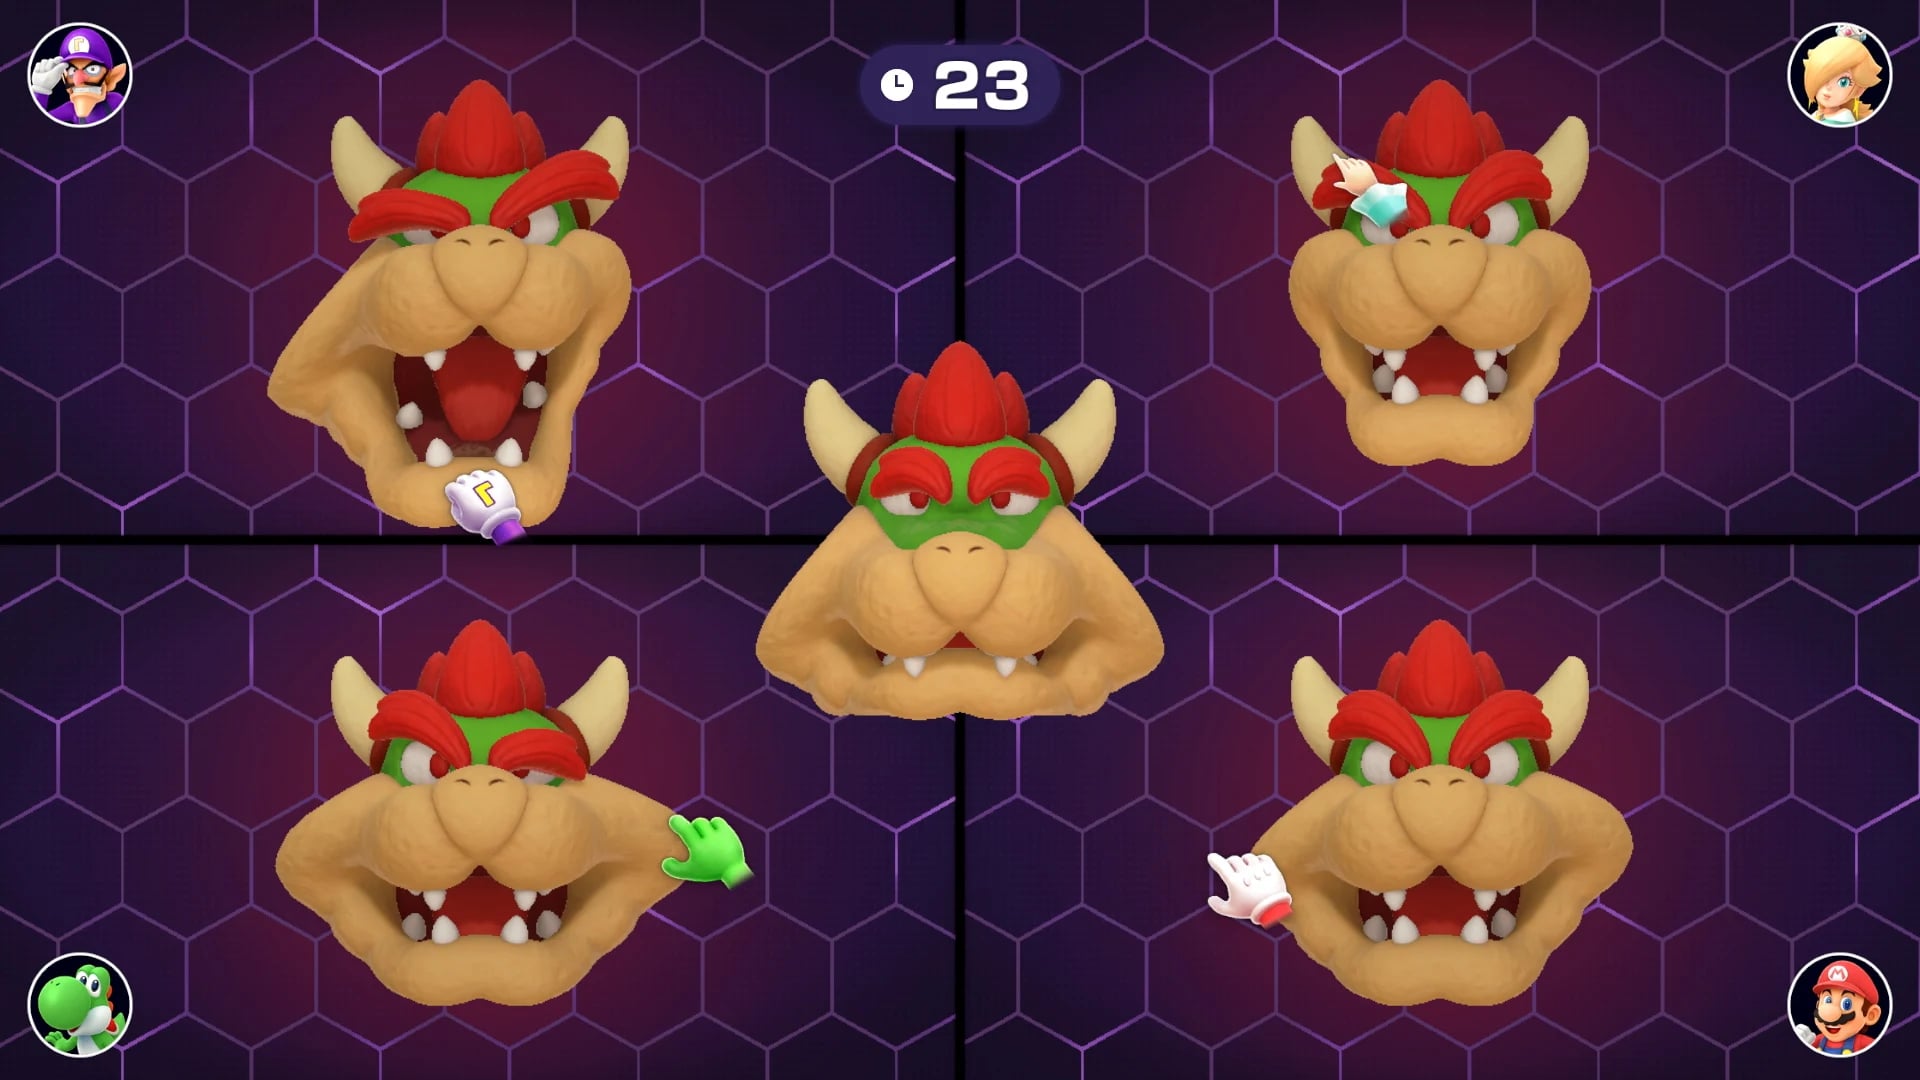 Mario party superstars screenshot 10 10